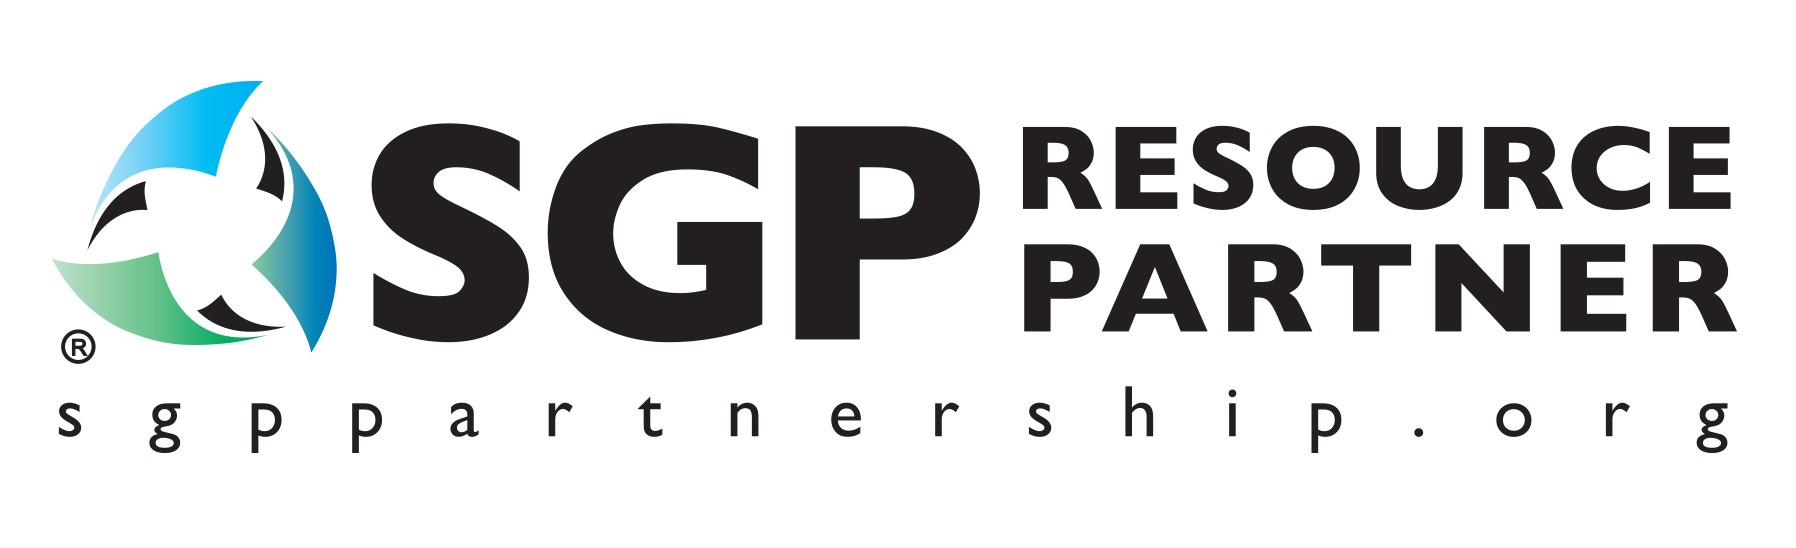 SGP Resource Partner Logo